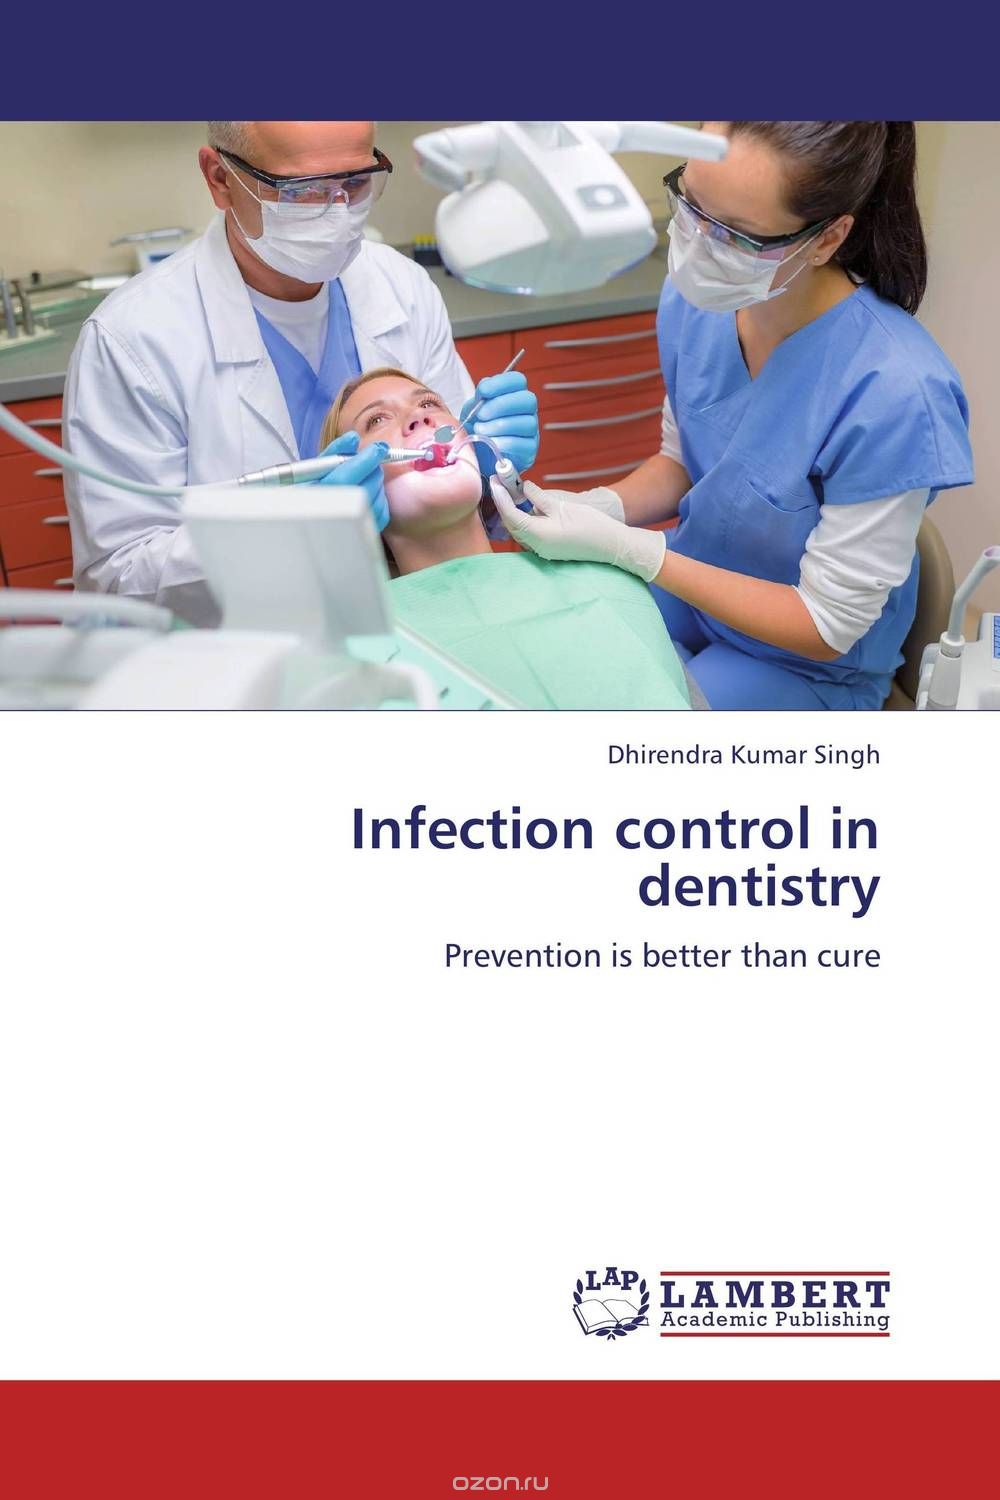 Скачать книгу "Infection control in dentistry"